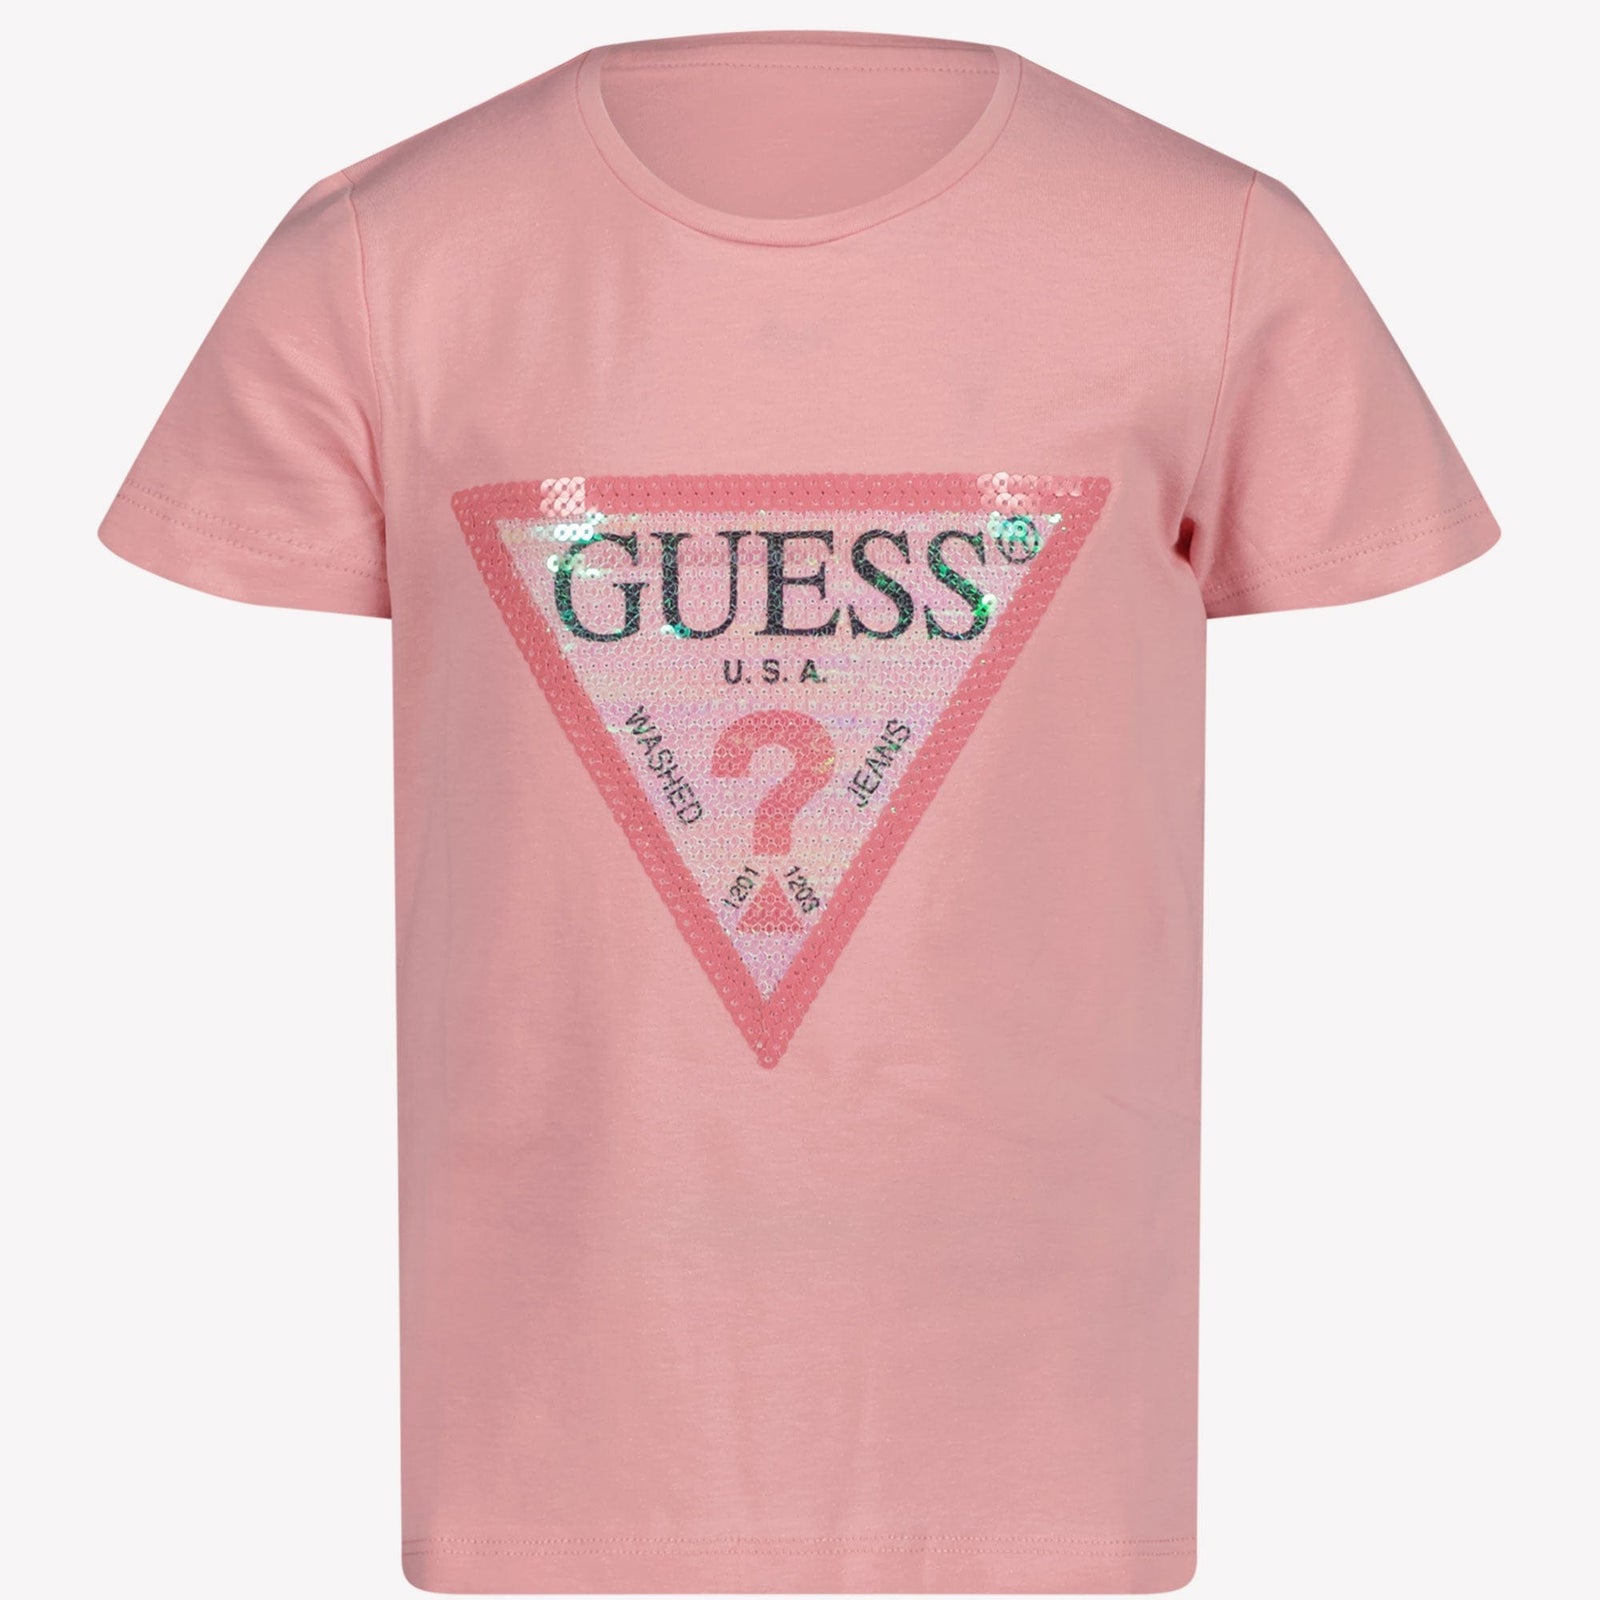 Guess Kinder Meisjes T-Shirt Licht Roze 2Y